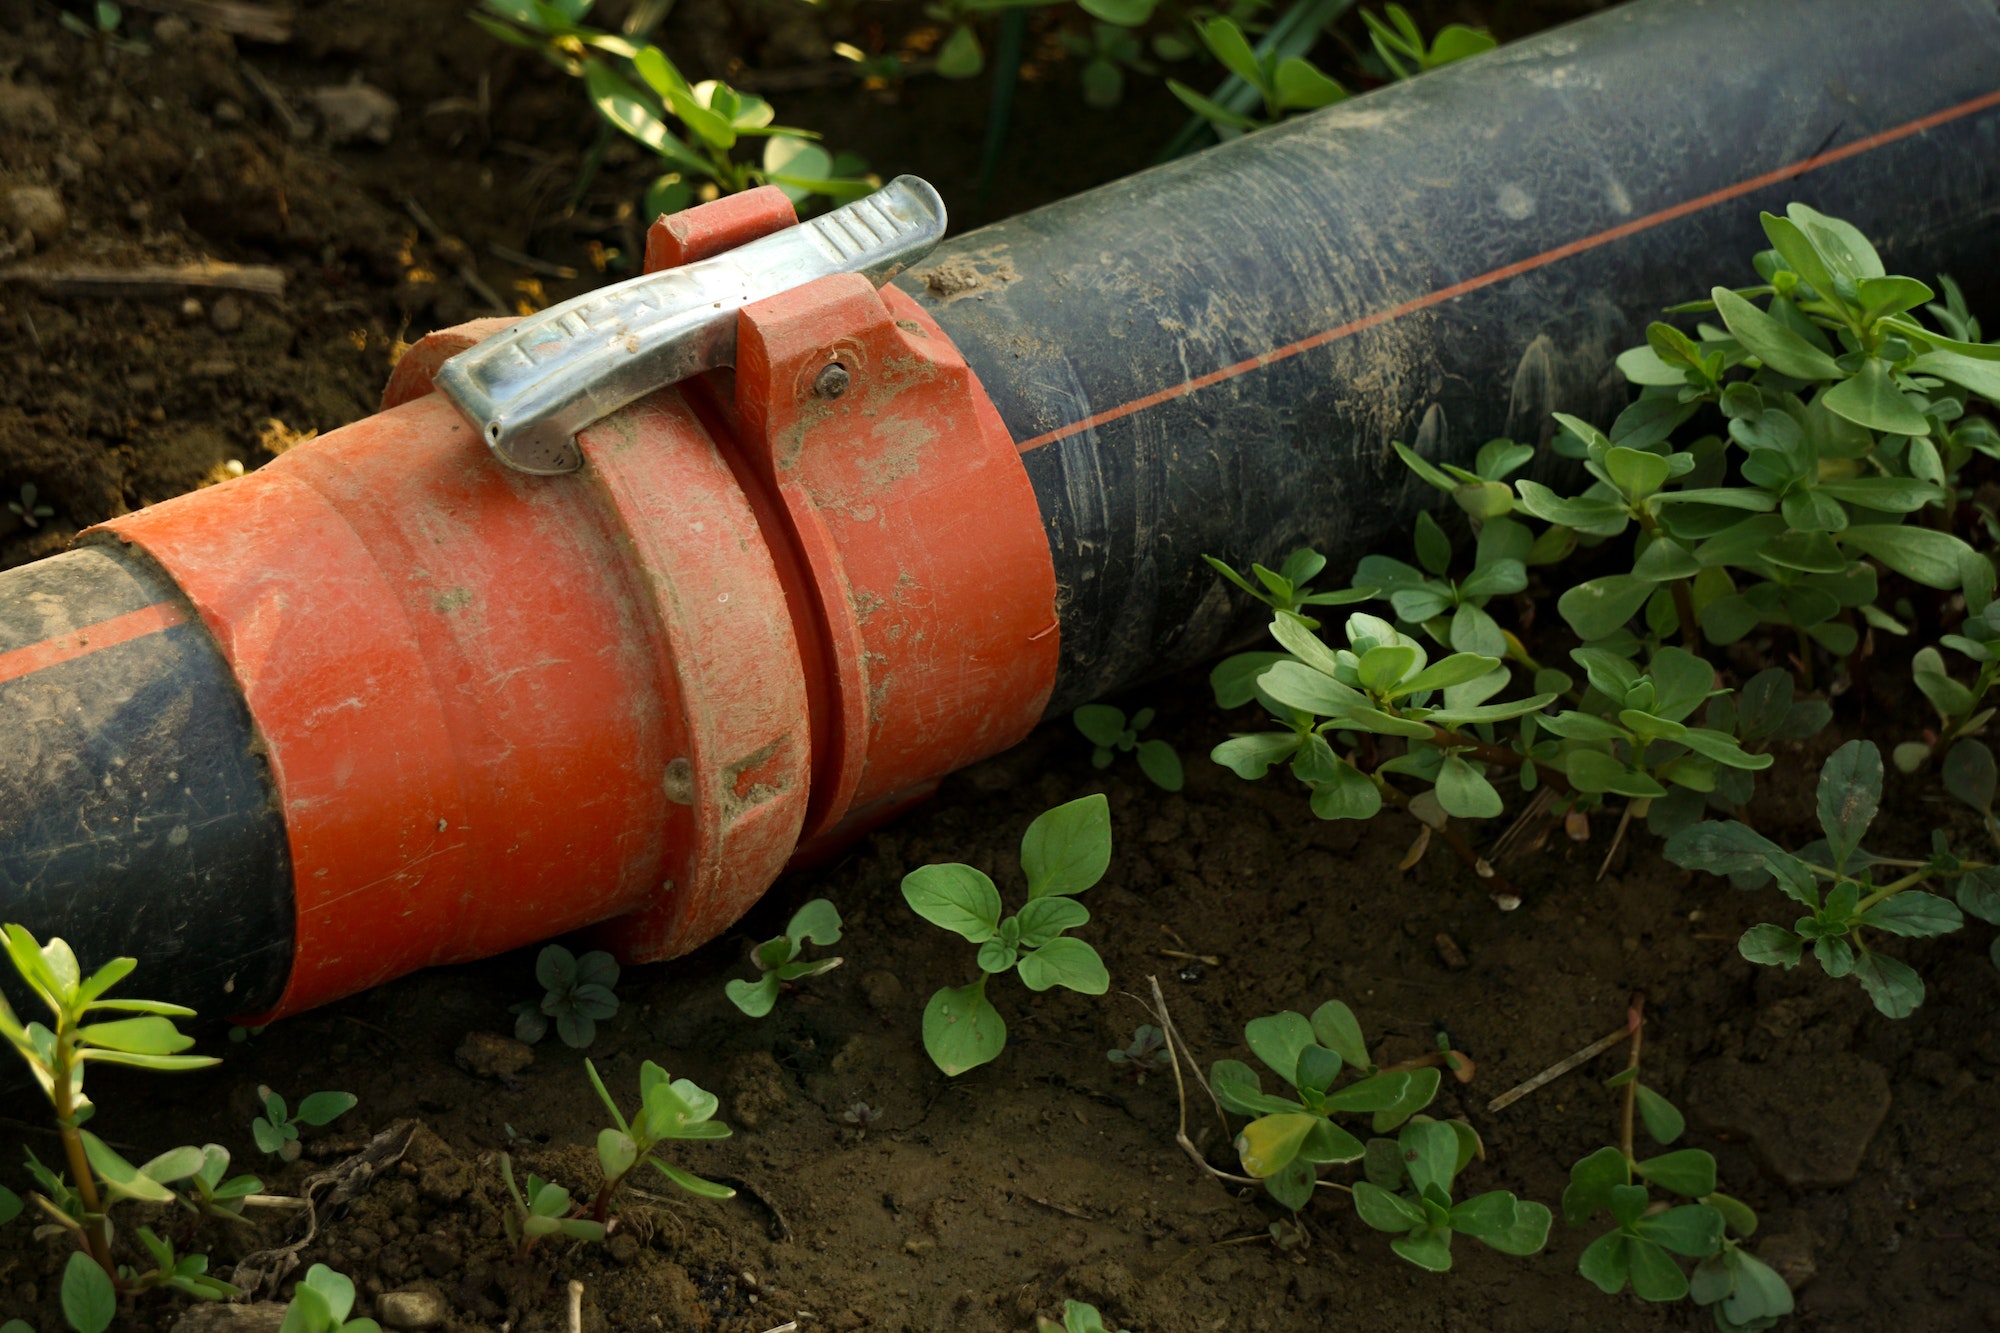 Closeup of a Garden irrigation hose connections